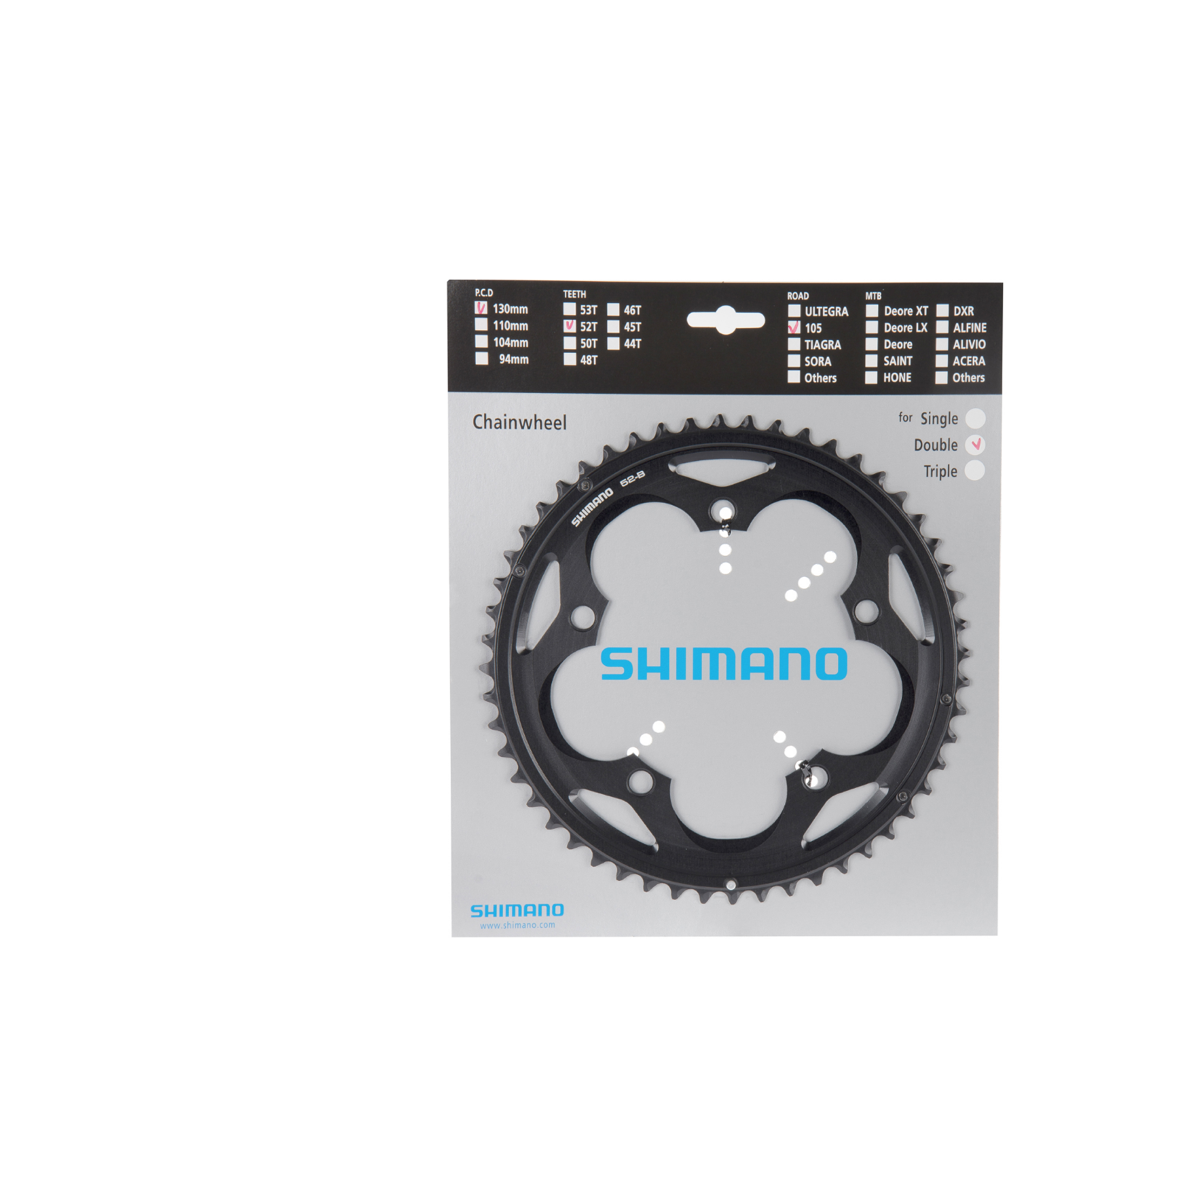 Shimano 105 FC-5700 52T road bike chainrings